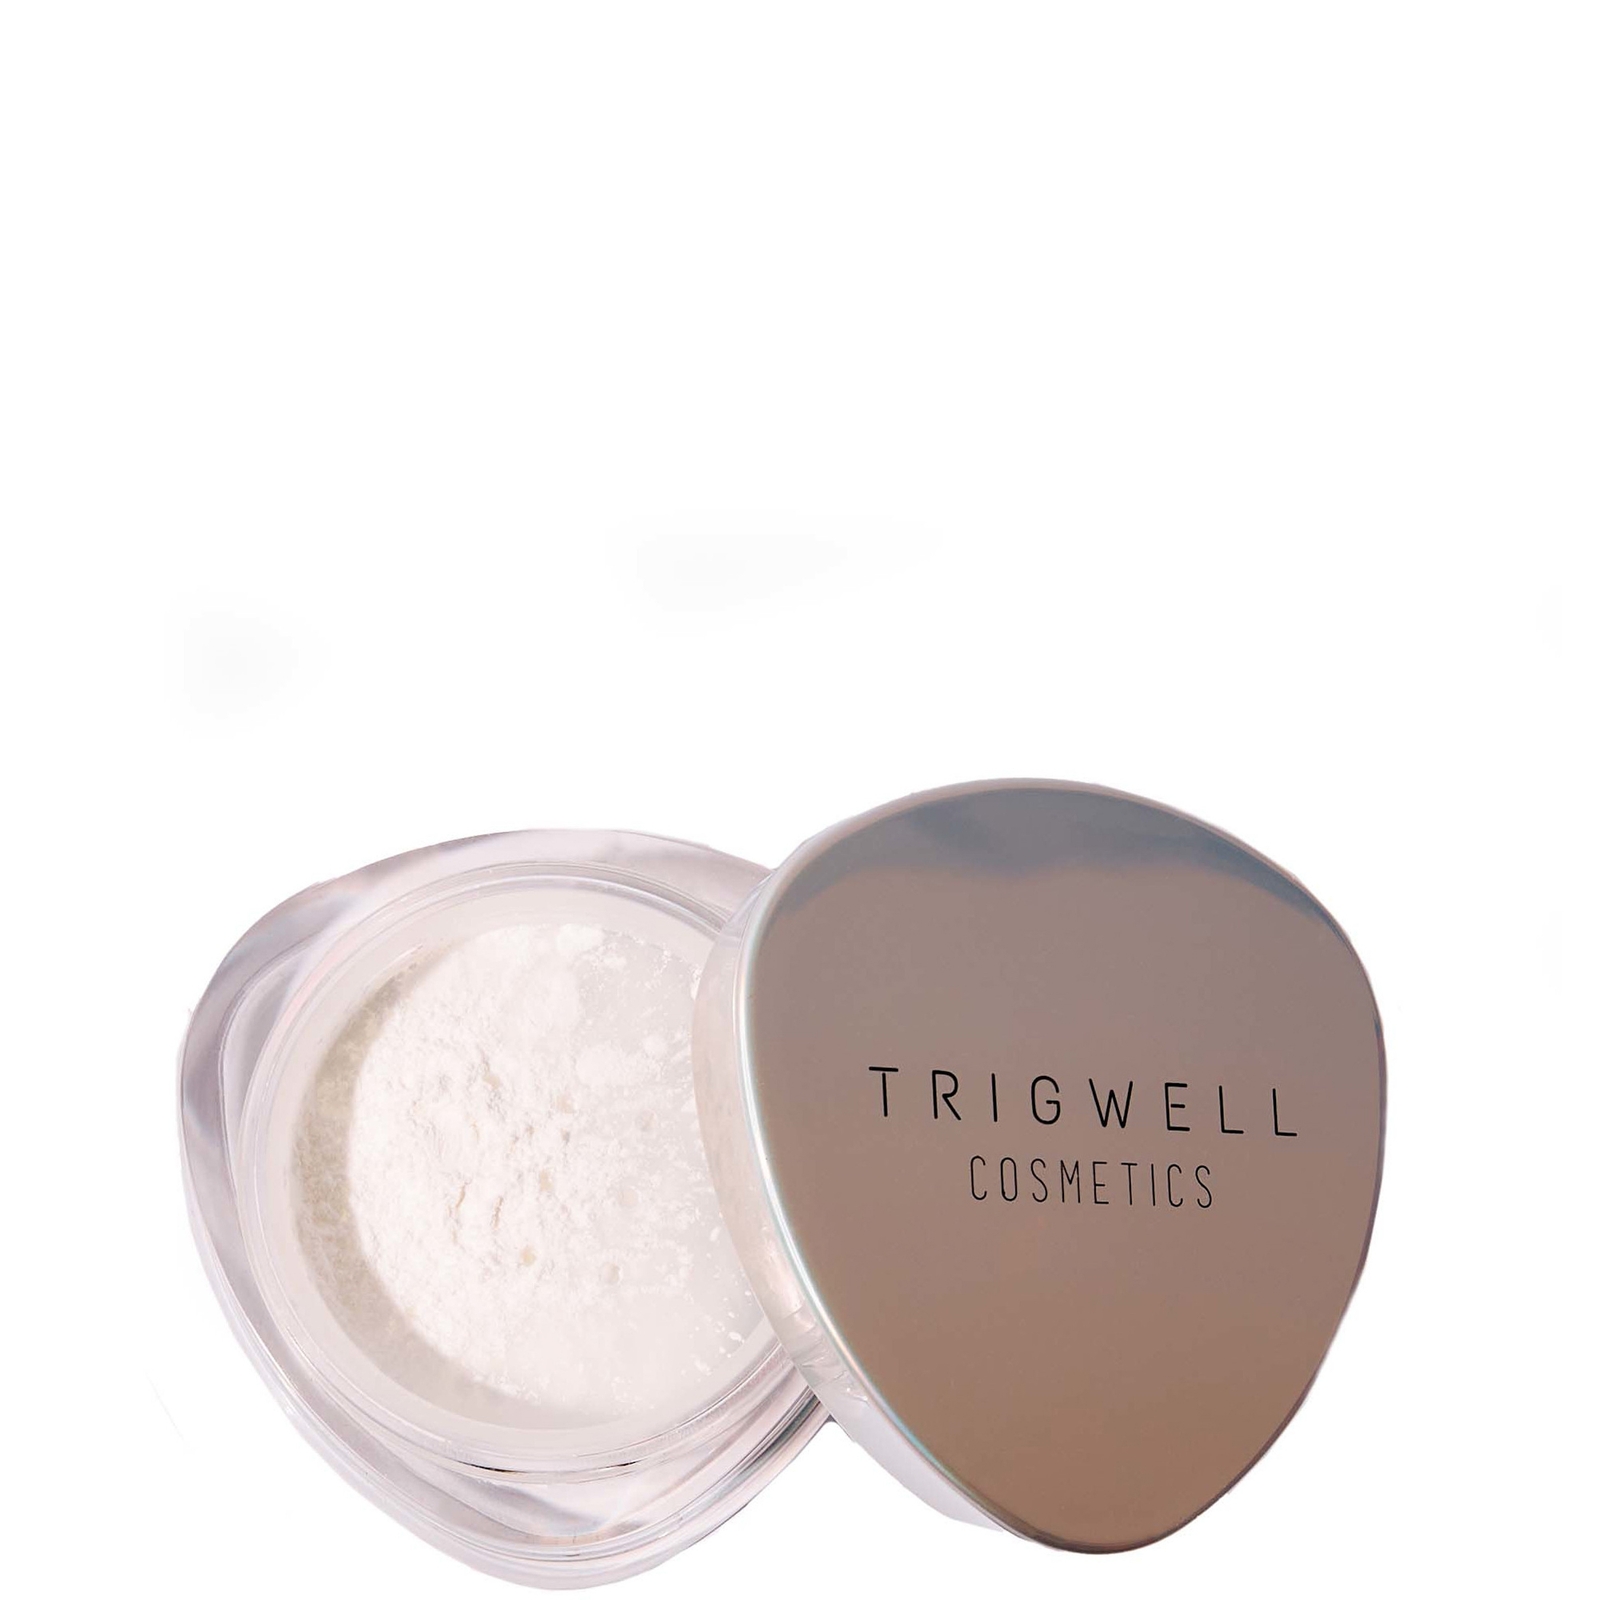 Trigwell Cosmetics Velvet Setting Powder 8g (Various Shades) - Shade 0